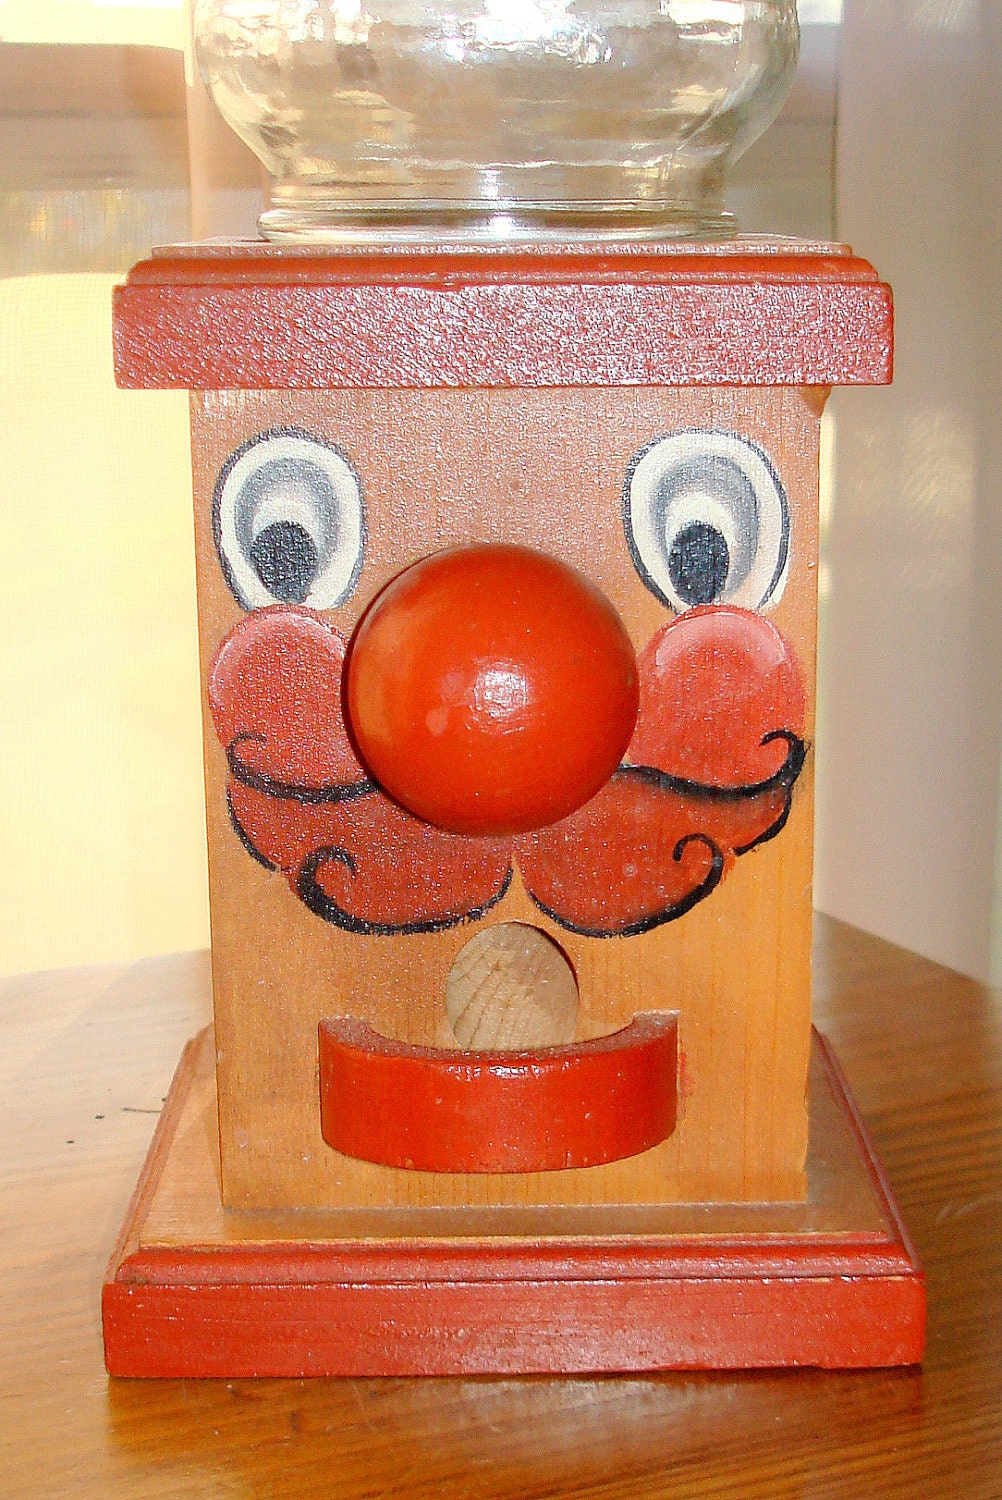 Vintage Candy Gumball Machine, Dispenser, Handmade, Wood, Hand Painted